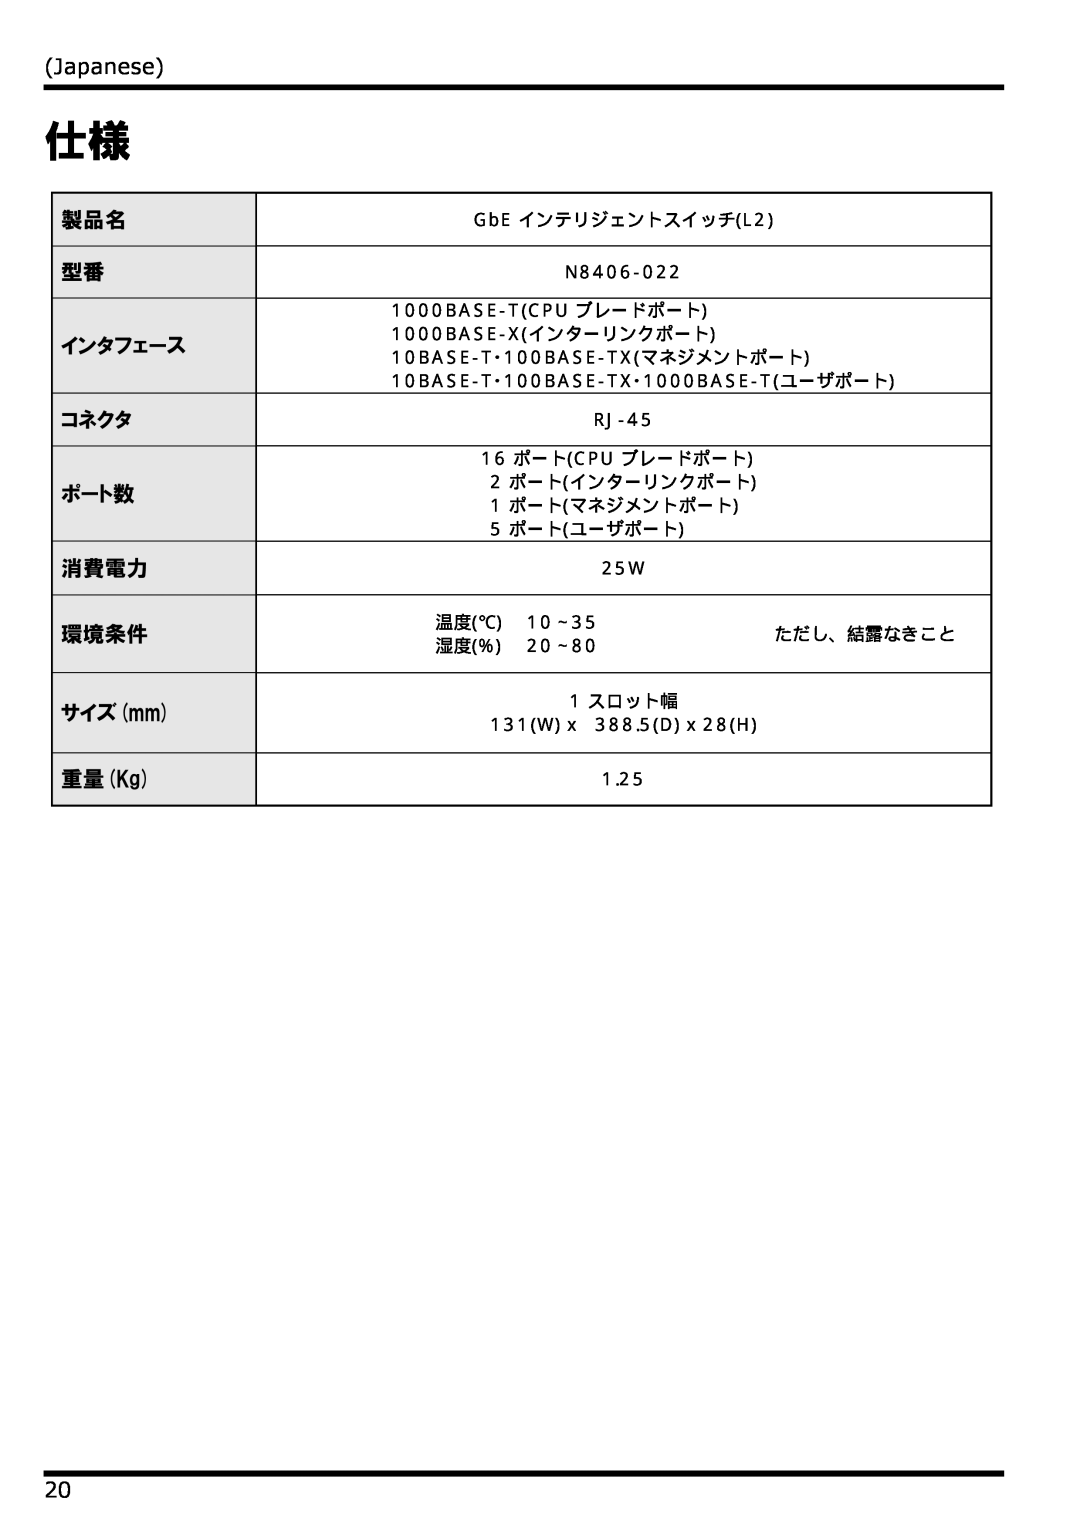 NEC N8406-022 manual Japanese, インタフェース, コネクタ, ポート数, 消費電力, 環境条件 